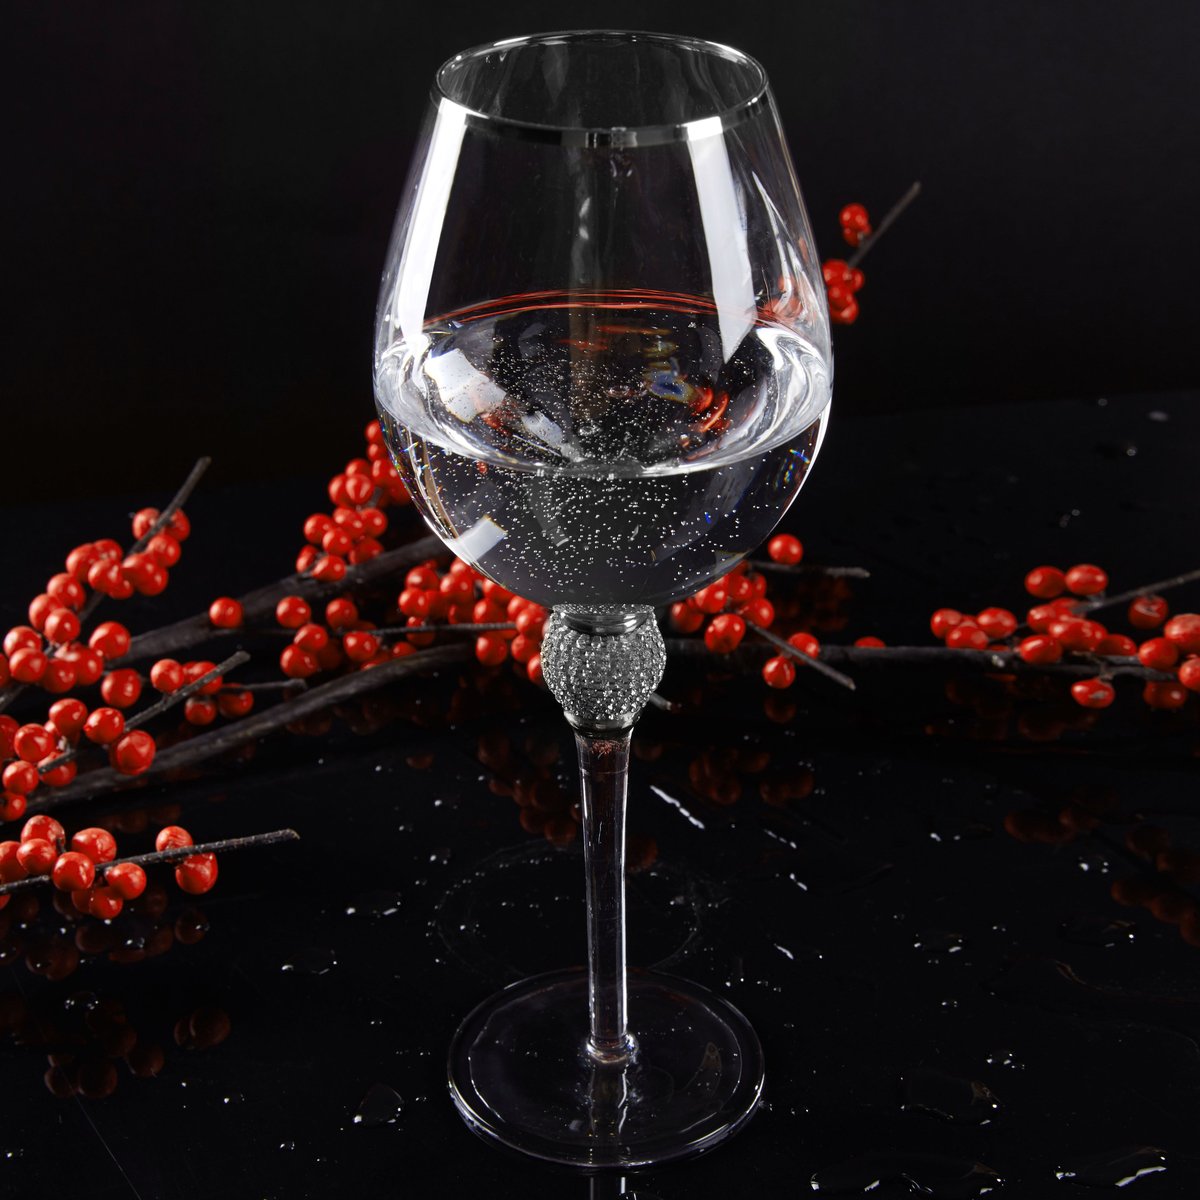 Berkware Rosè Wine Glass with Rhinestone Design and Gold Rim Set